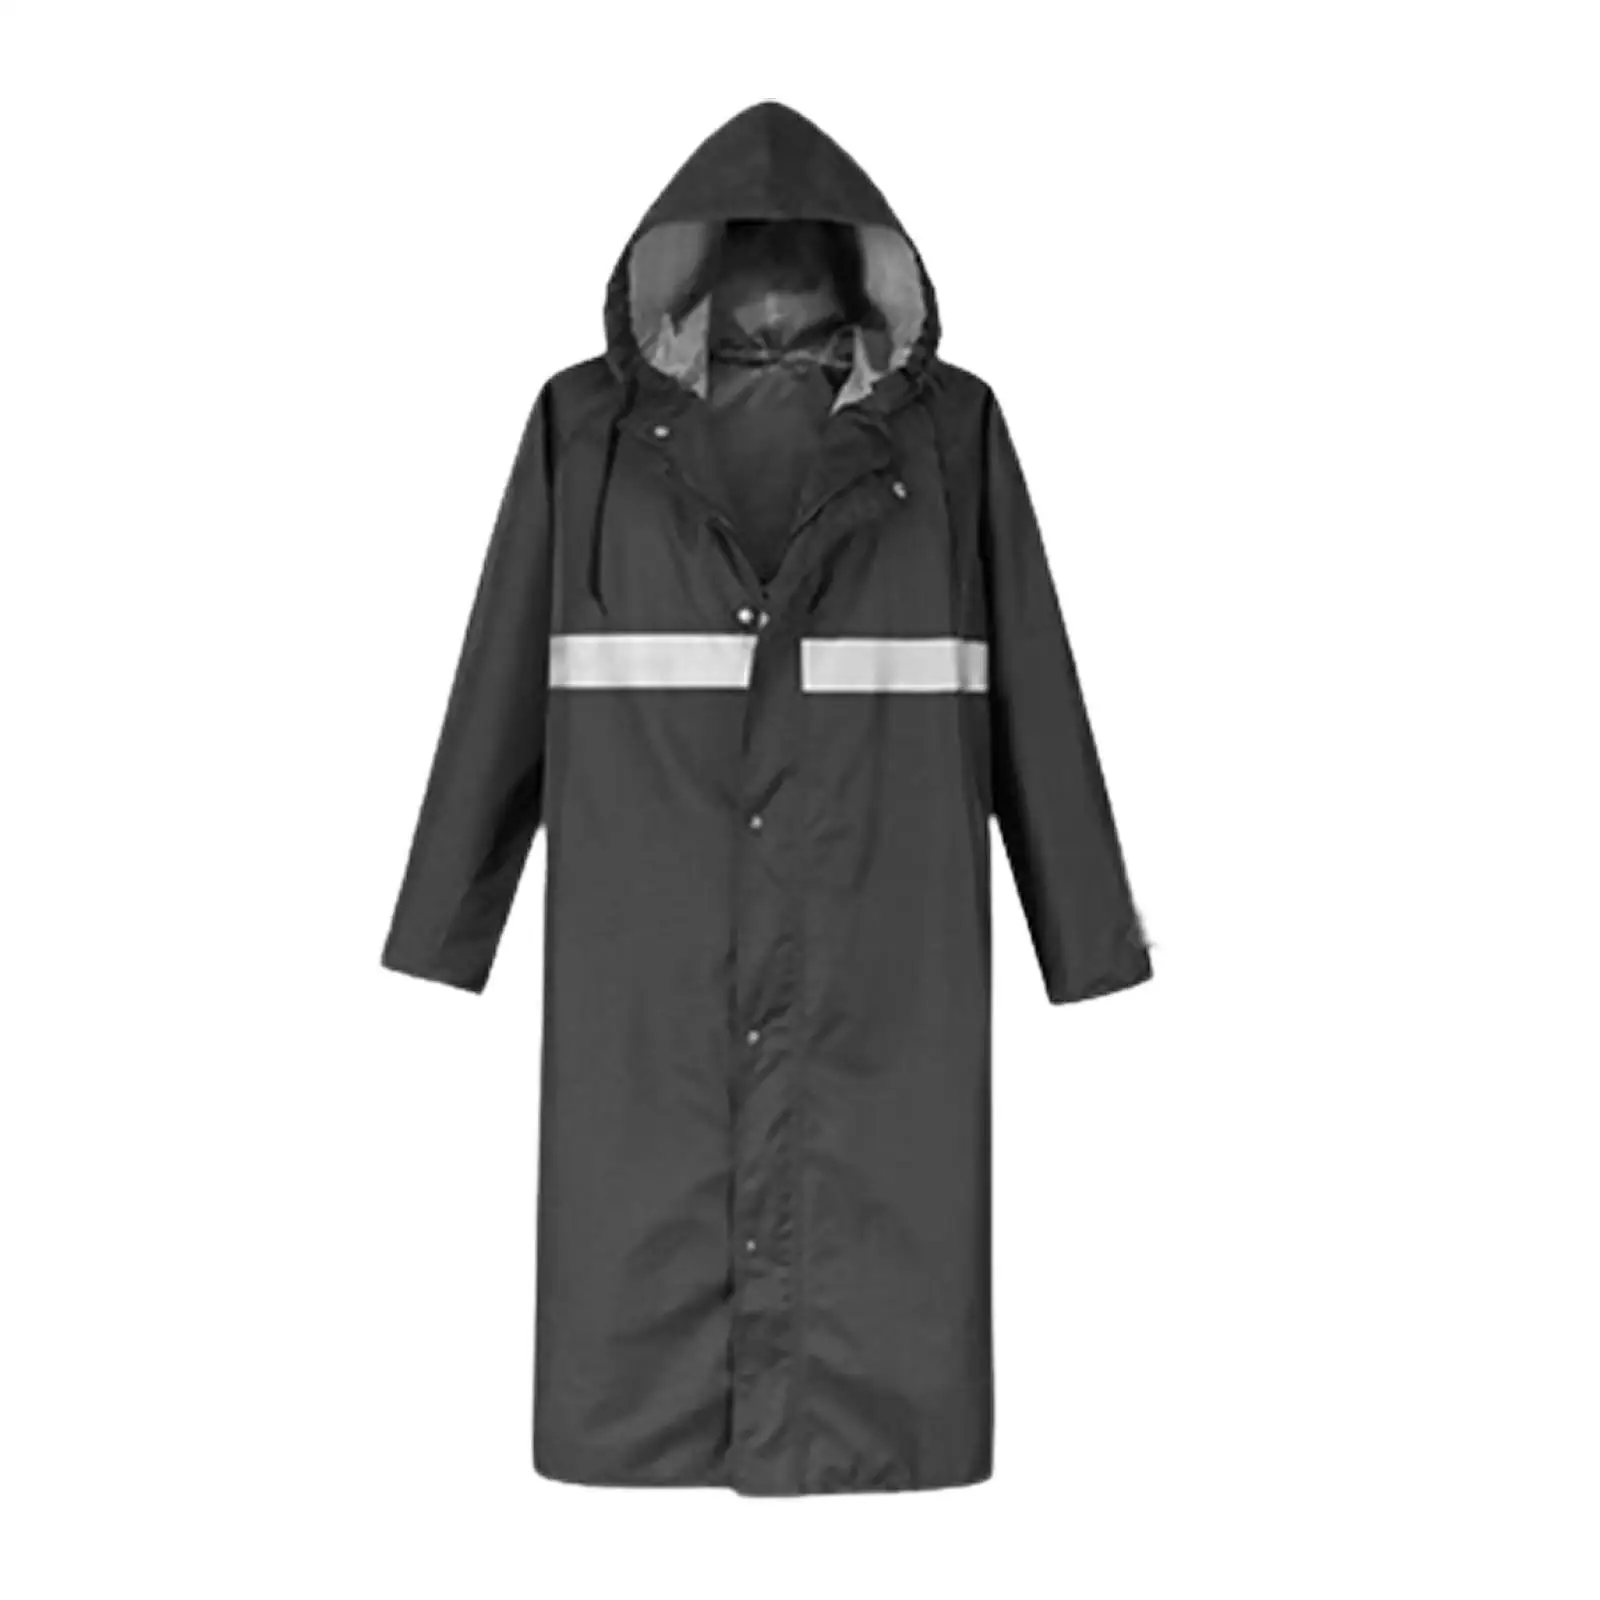 Long Hooded Raincoat Rain Poncho Long Sleeve Windbreaker Universal Rain Jacket Rain Coat with Hood for Outdoor Activities